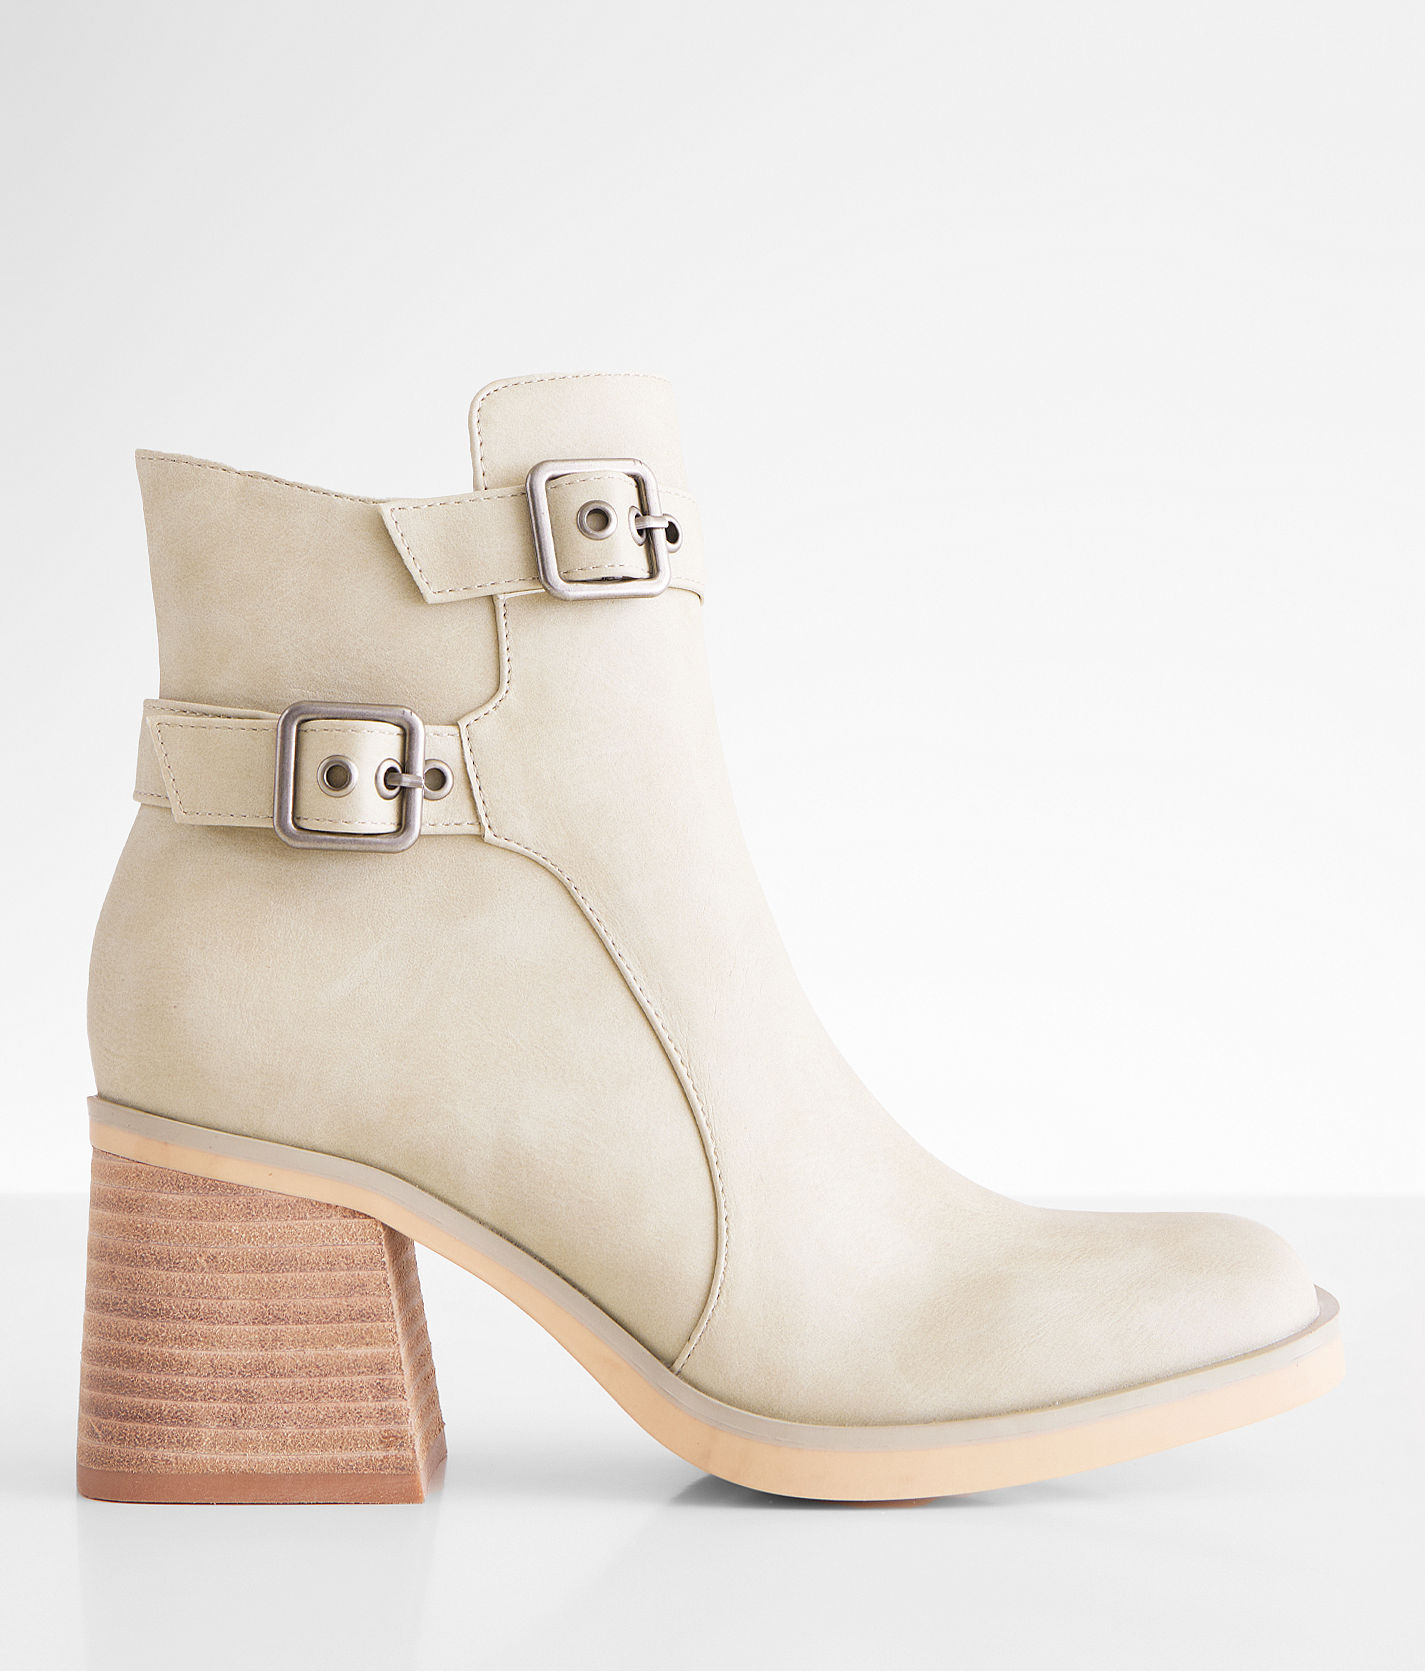 Vintage 93 Denver Ankle Boot - Women's Shoes in Light Grey | Buckle